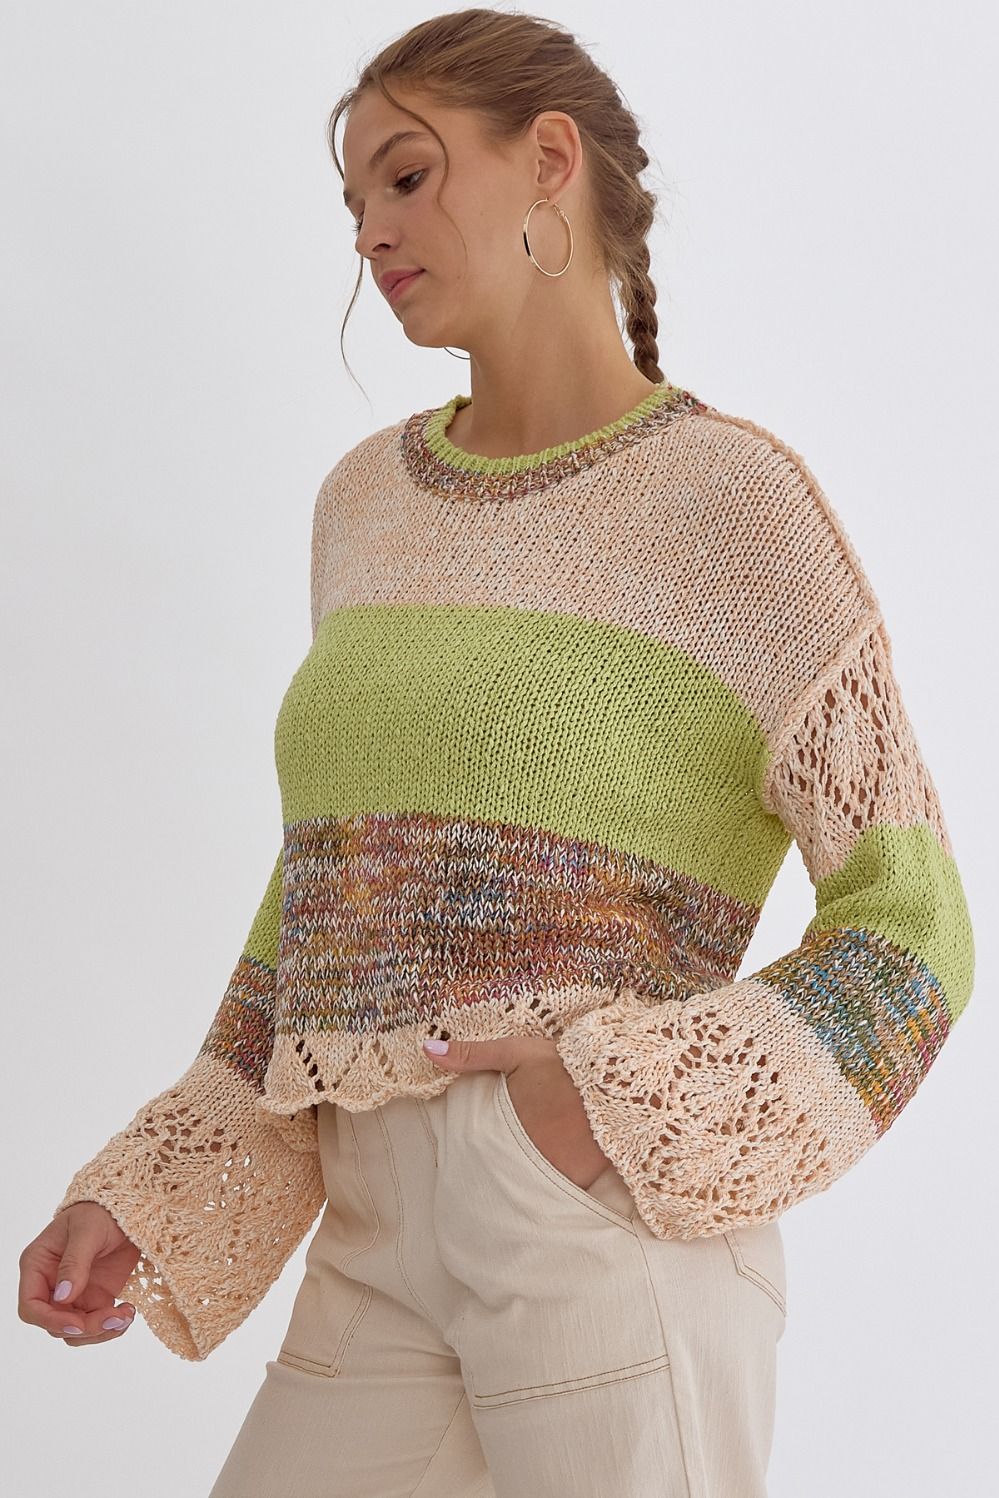 Zara Color Block Crocheted Sweater FINAL SALE